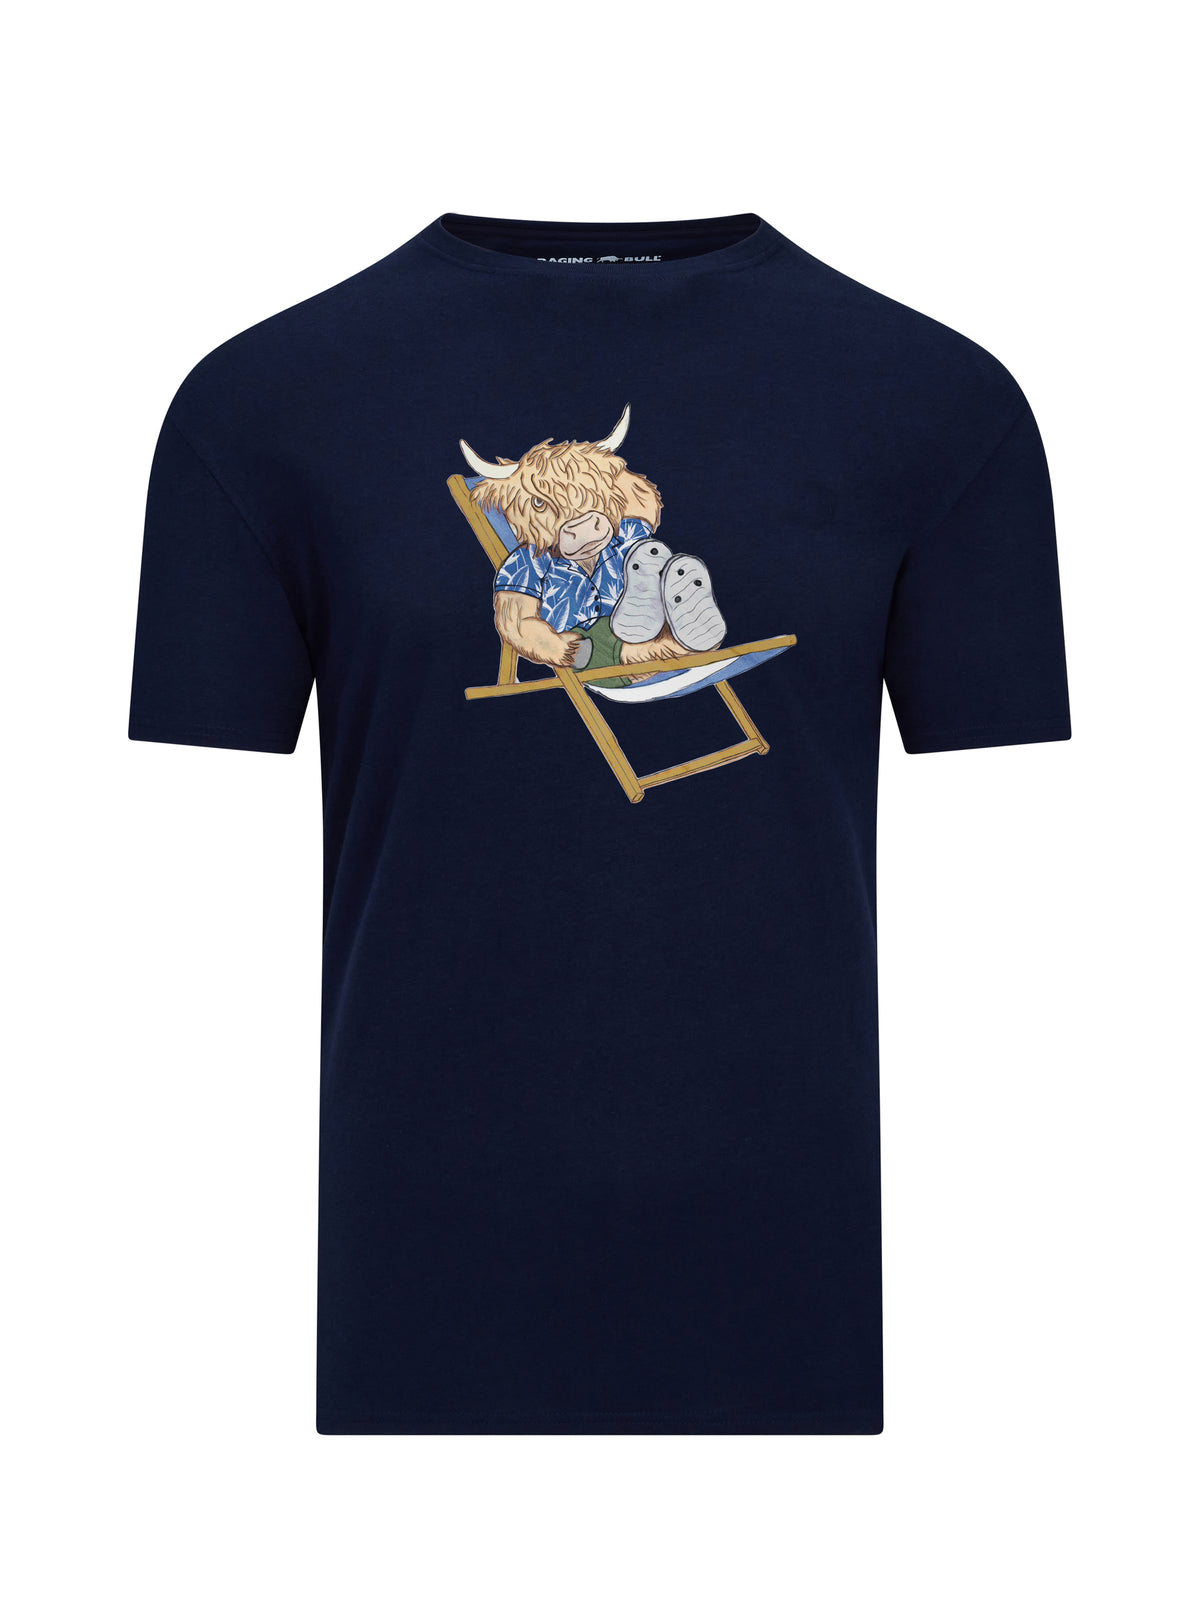 Bully Boy Holiday T-Shirt - Navy